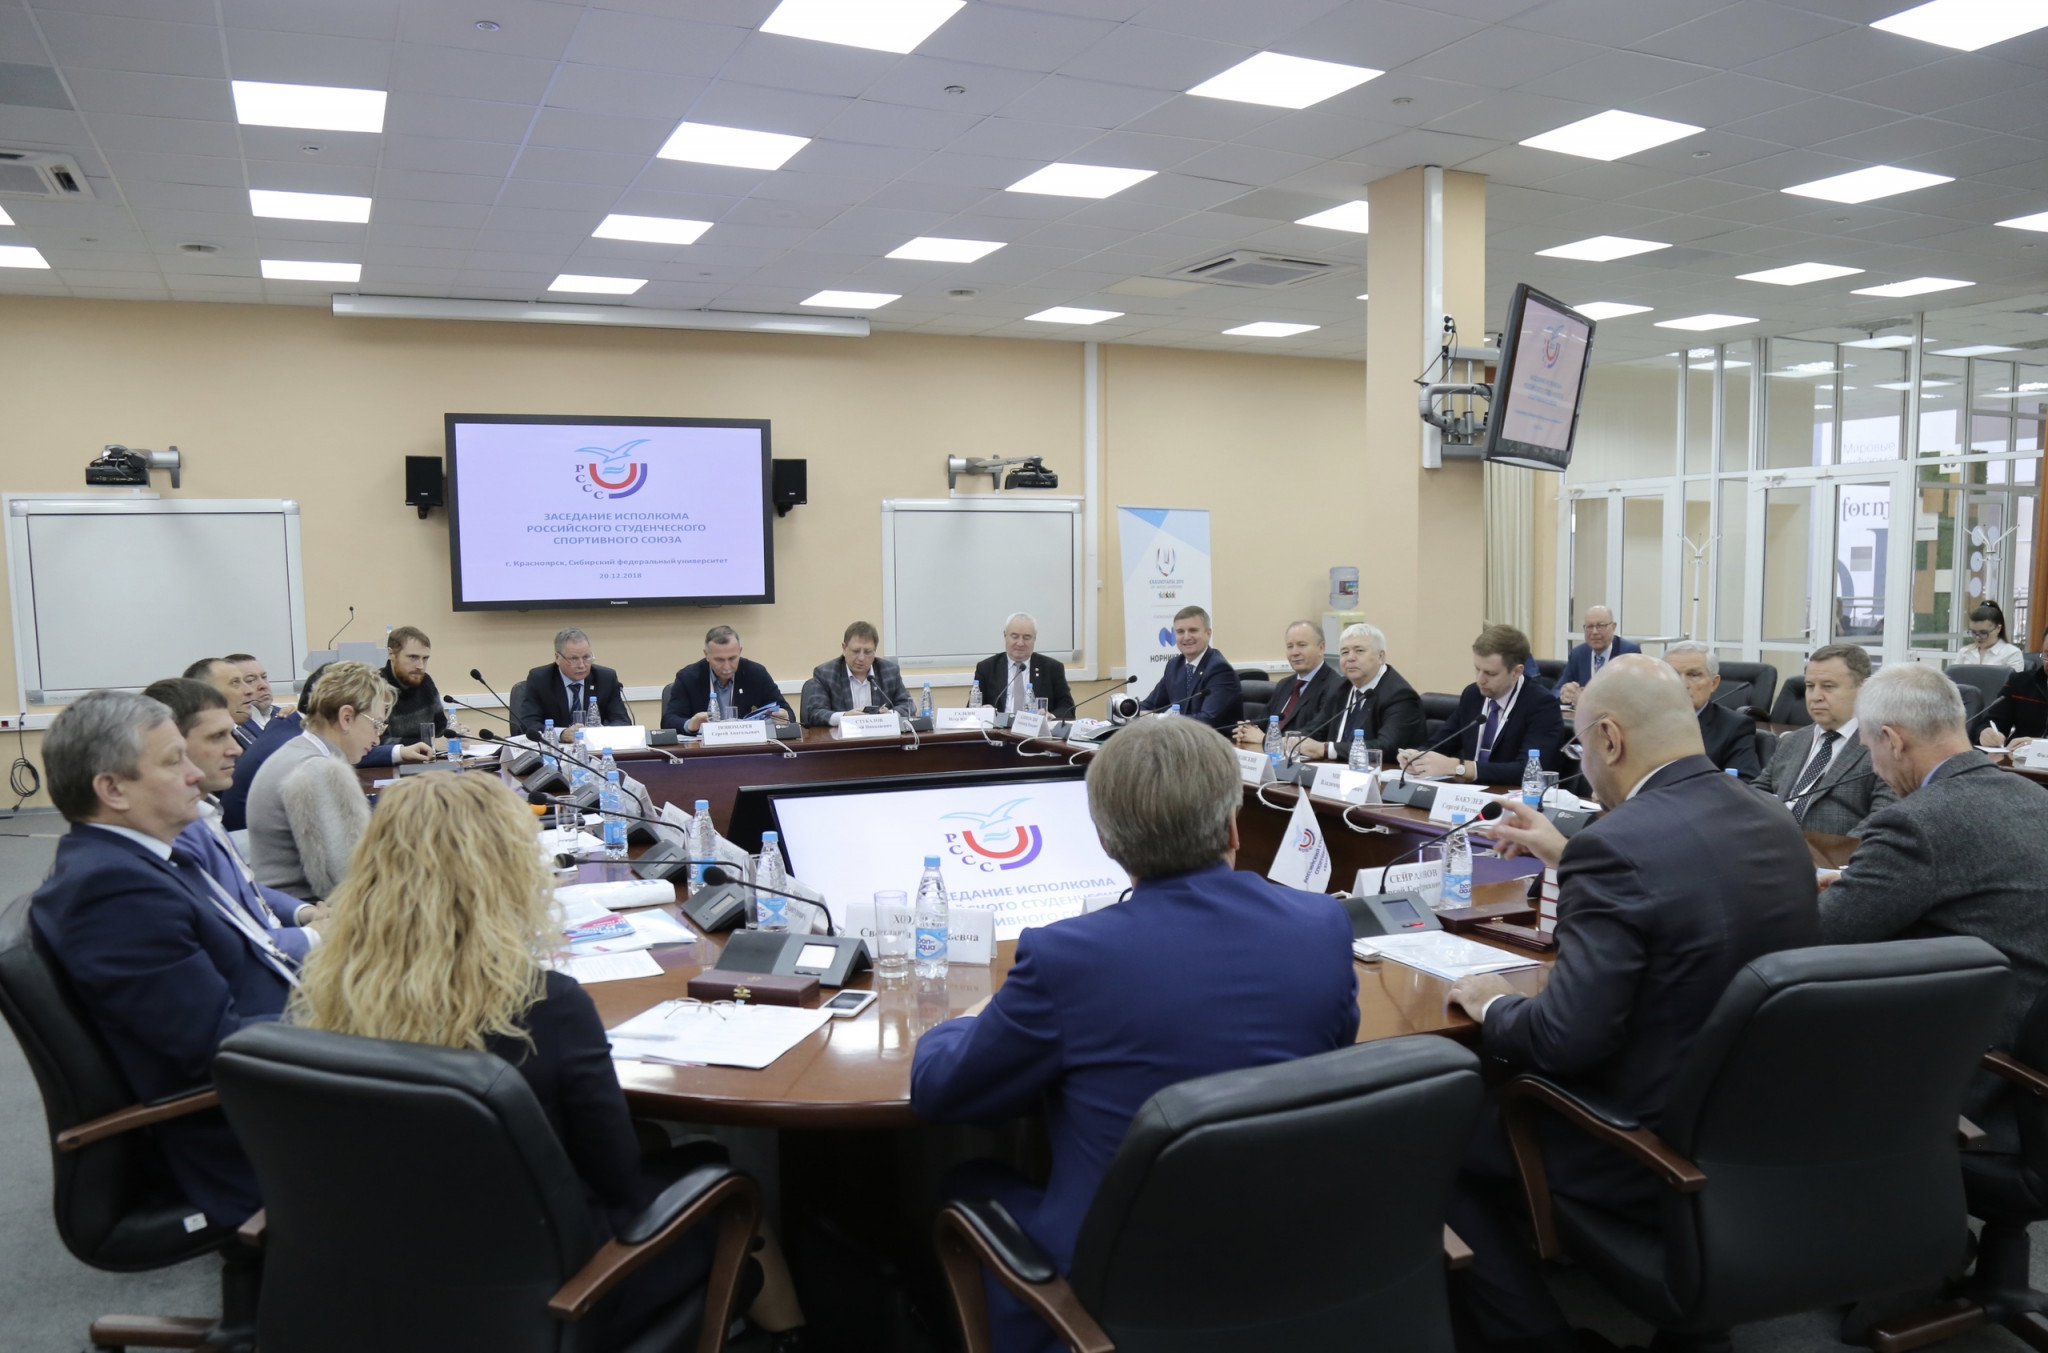 The Krasnoyarsk 2019 Monitoring Council has met to review preparations for this year's Winter Universiade ©Krasnoyarsk 2019